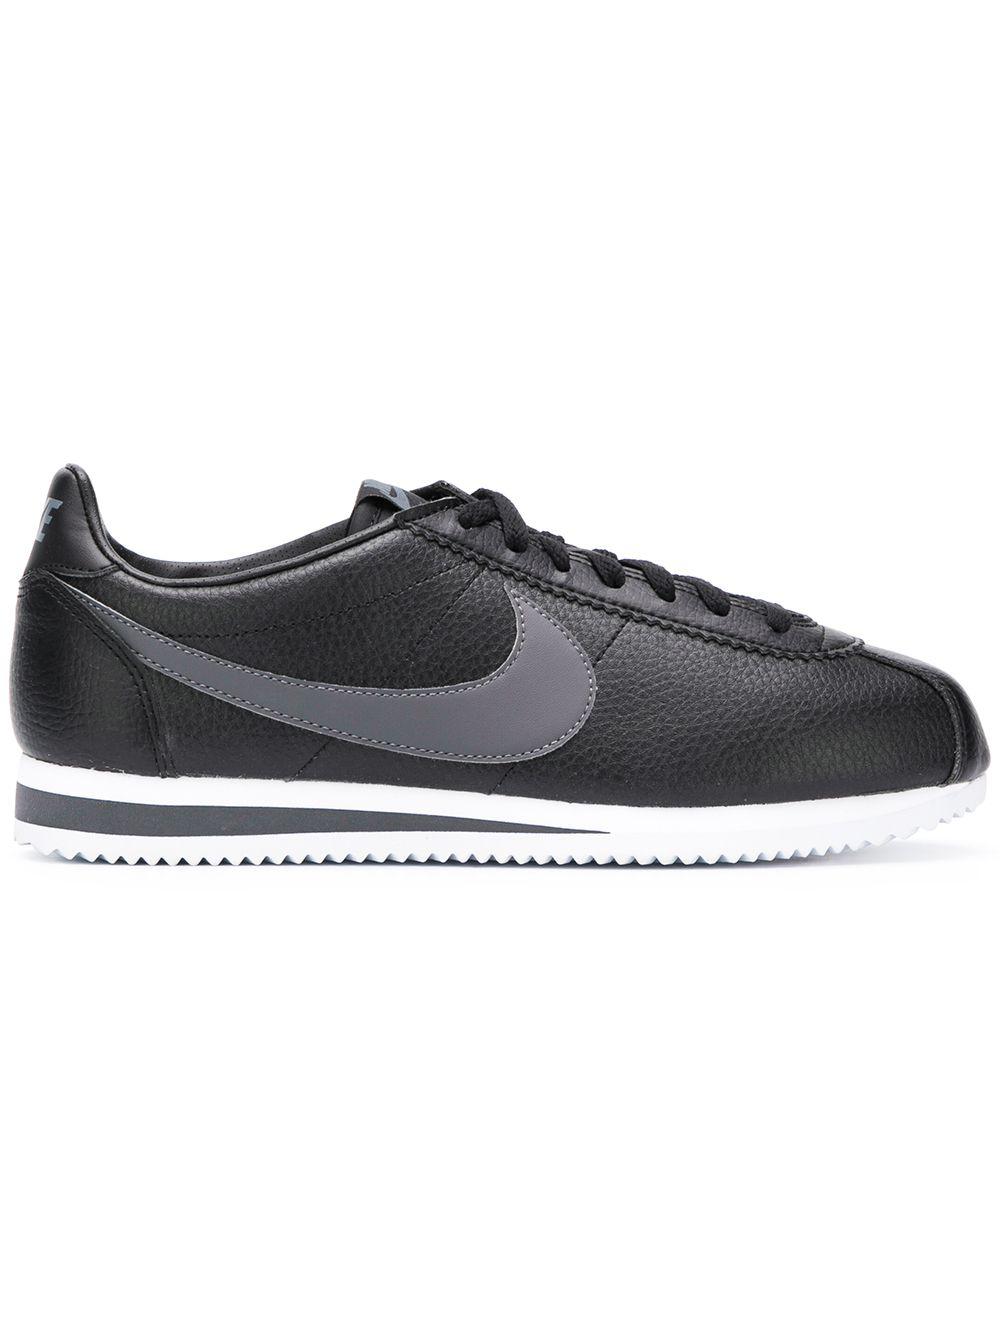 Nike Classic Cortez Leather in Black/Dark Grey-White (Black) for Men - Lyst